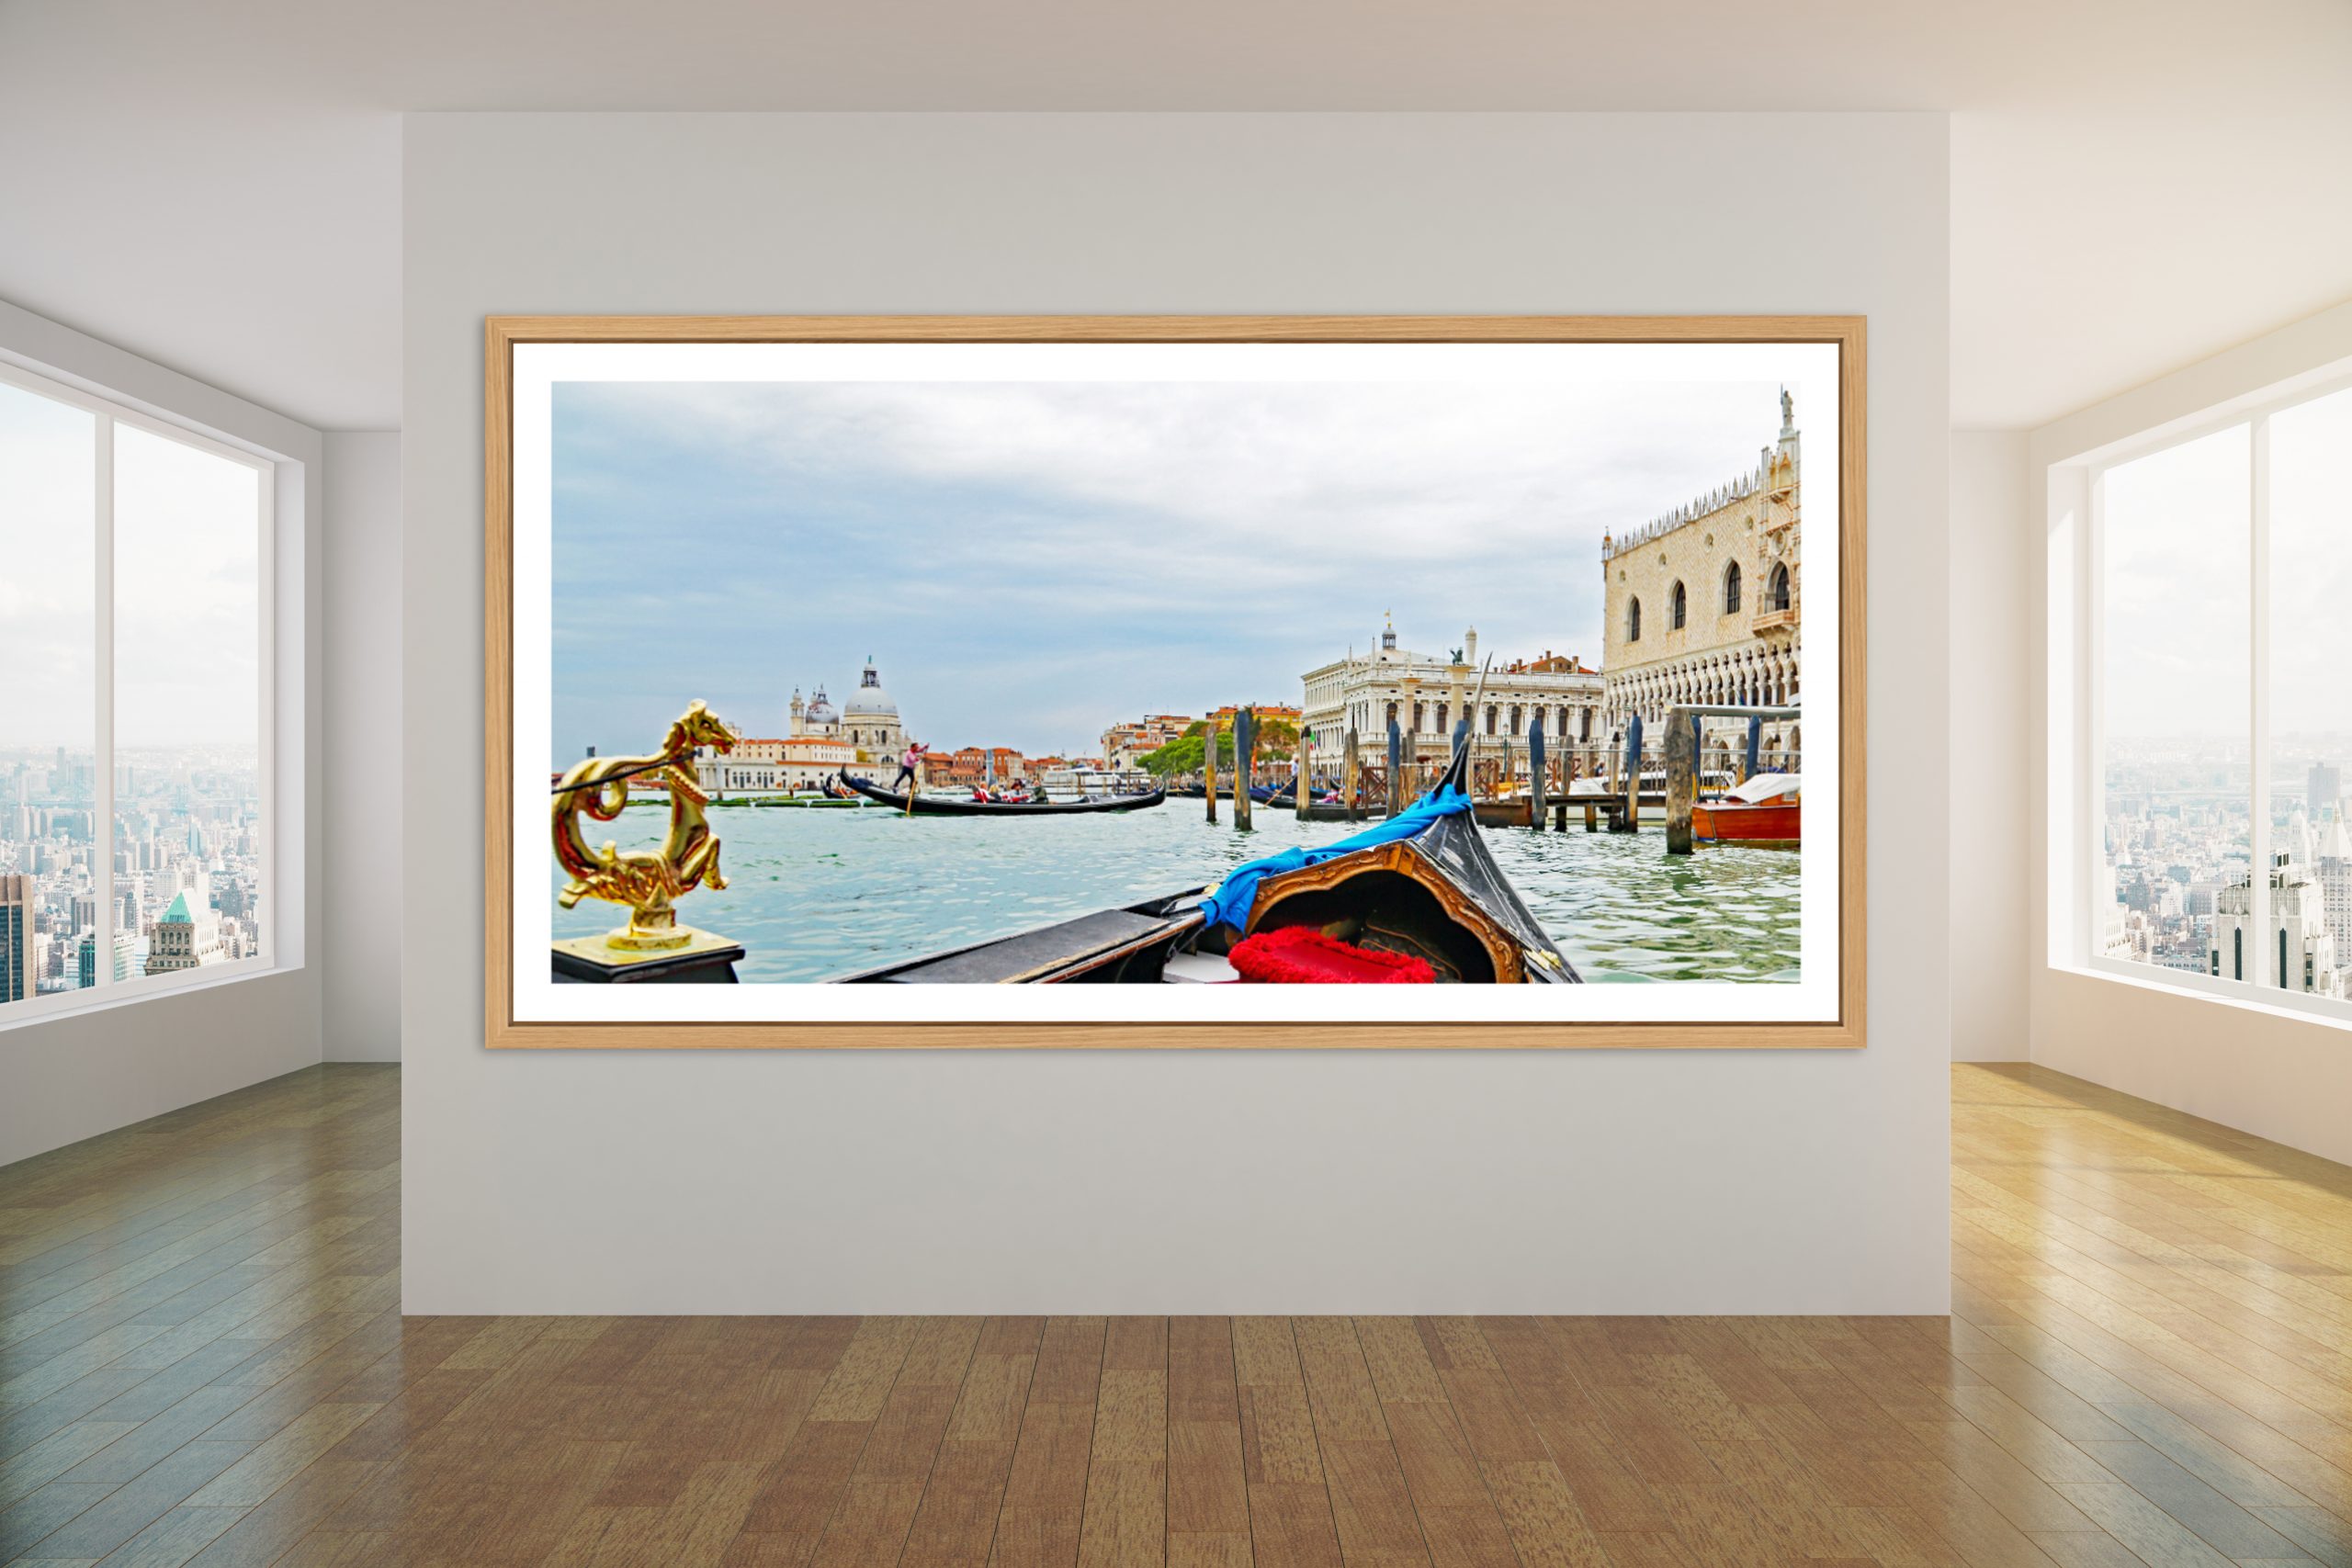 Boat in Venice in a Gallery